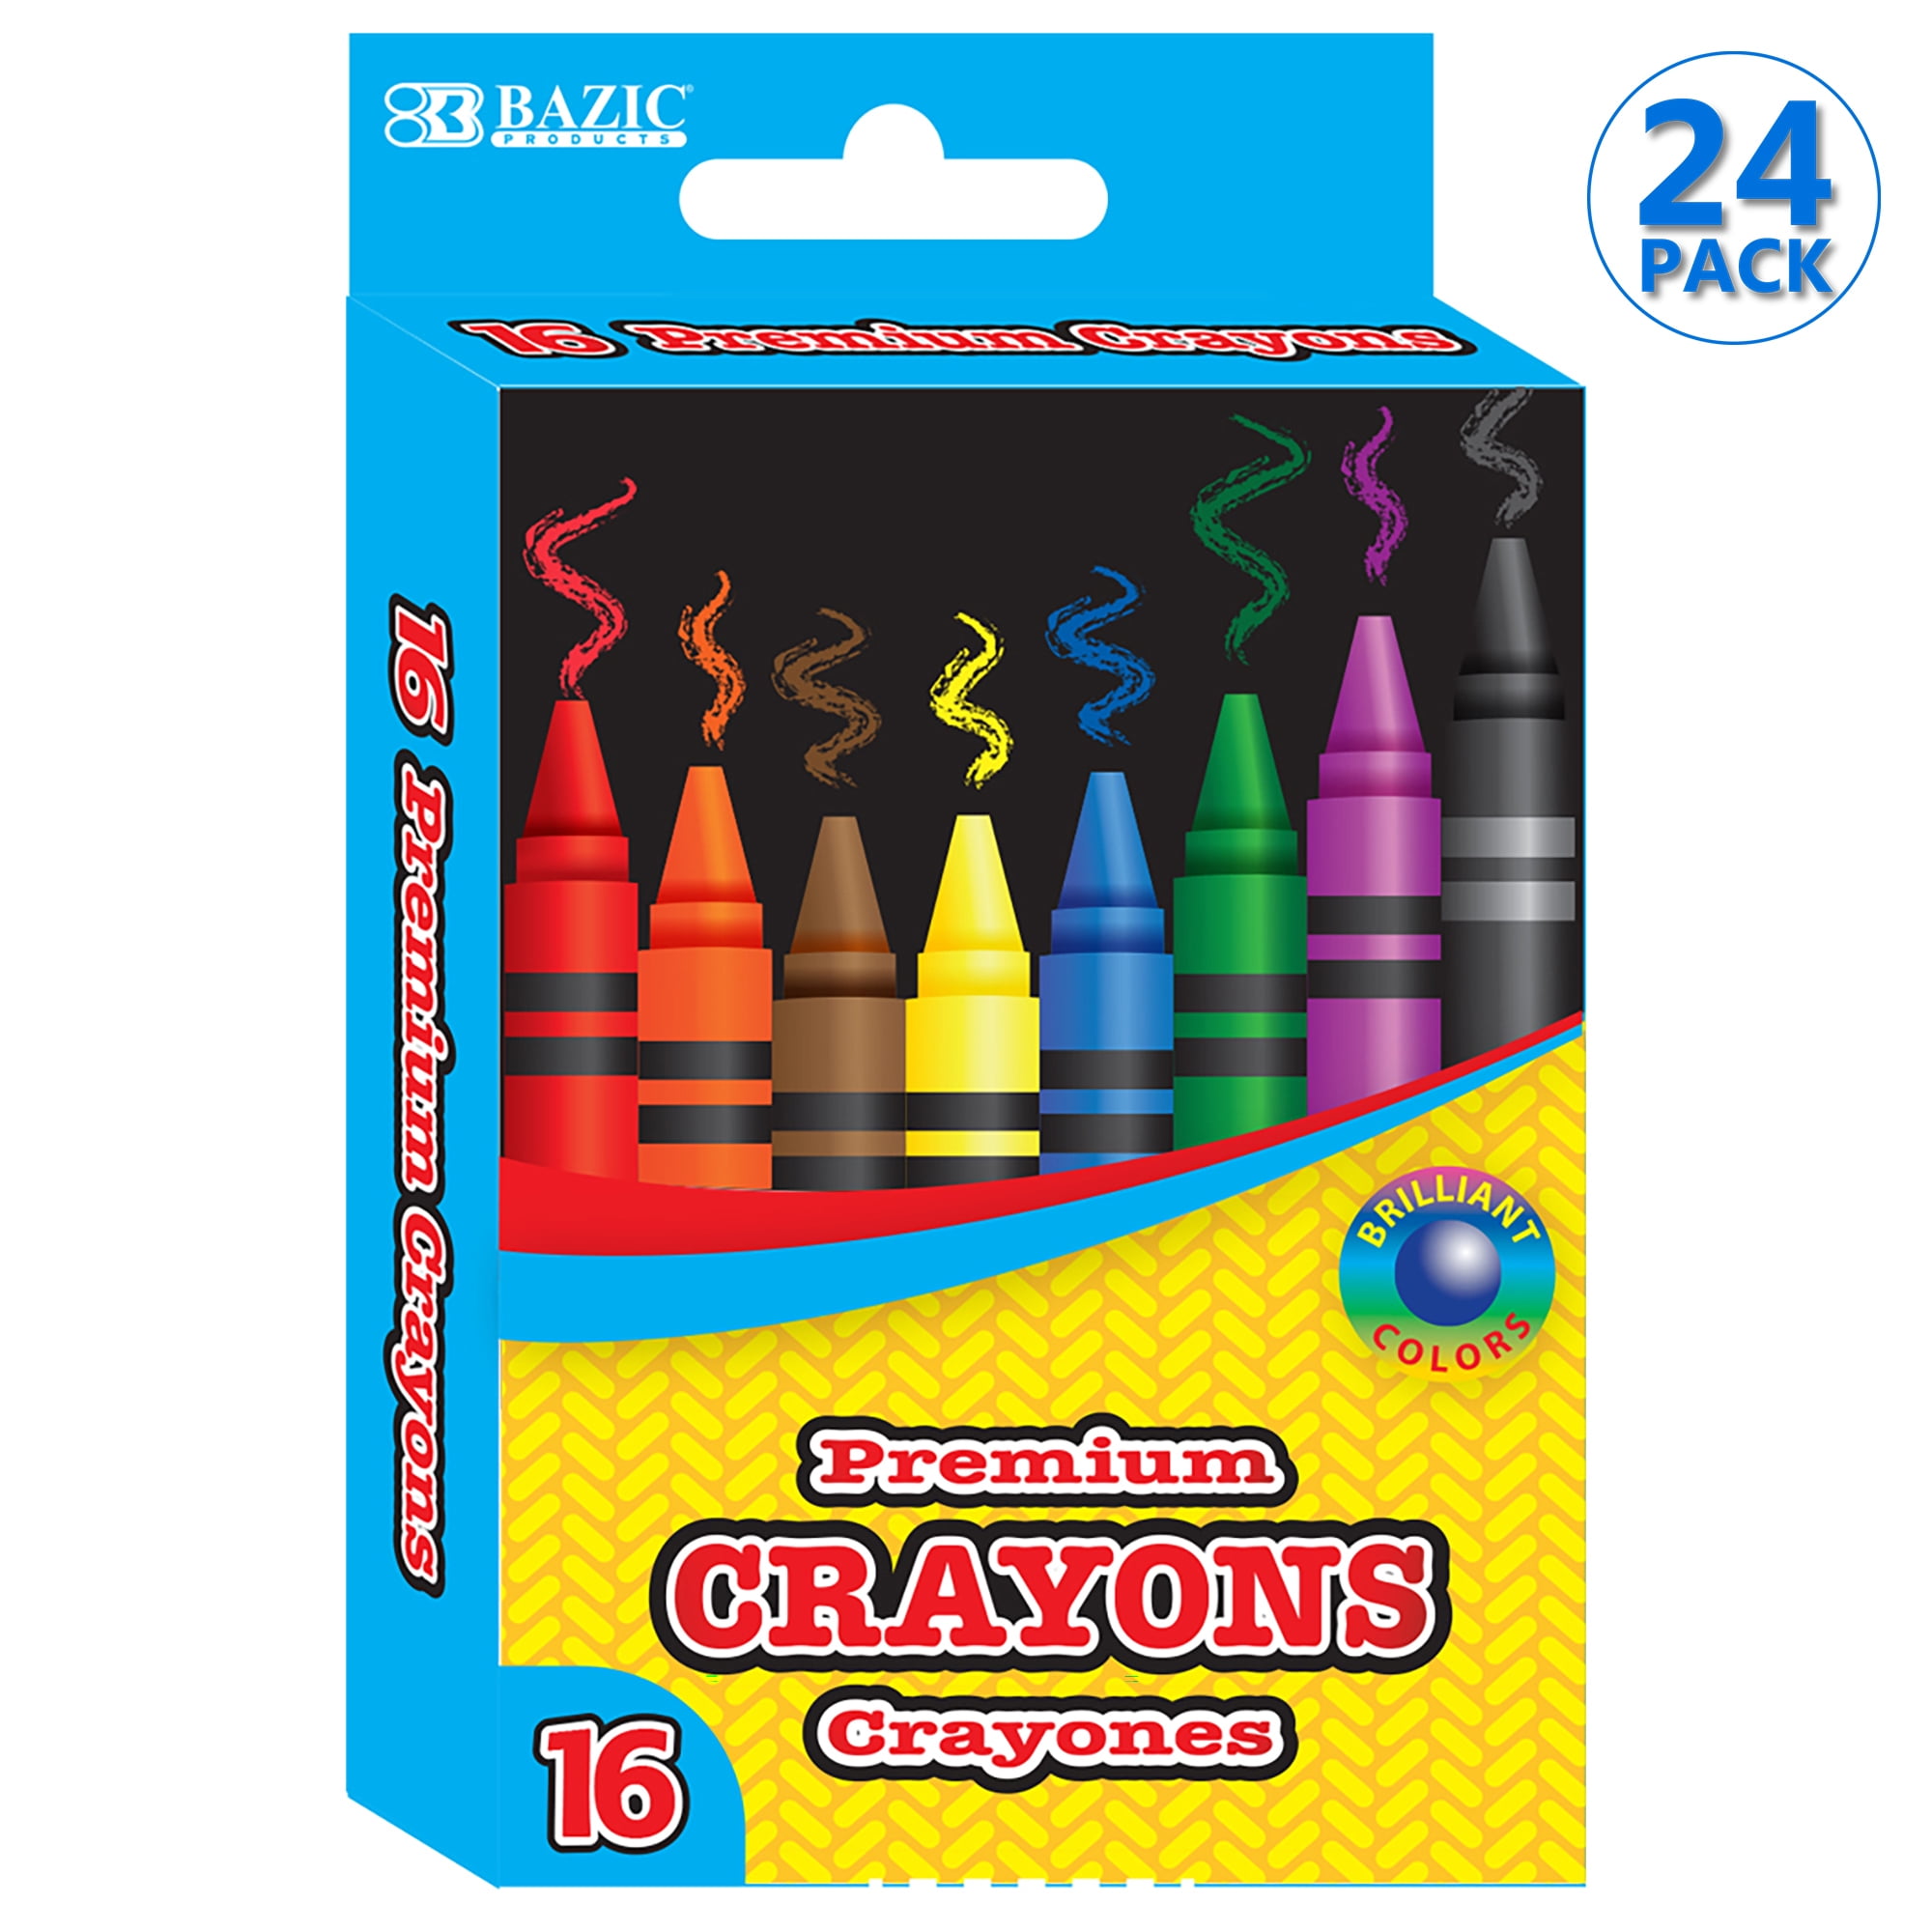 Crayola. 520336 Large Crayons, 16 Colors/Box 